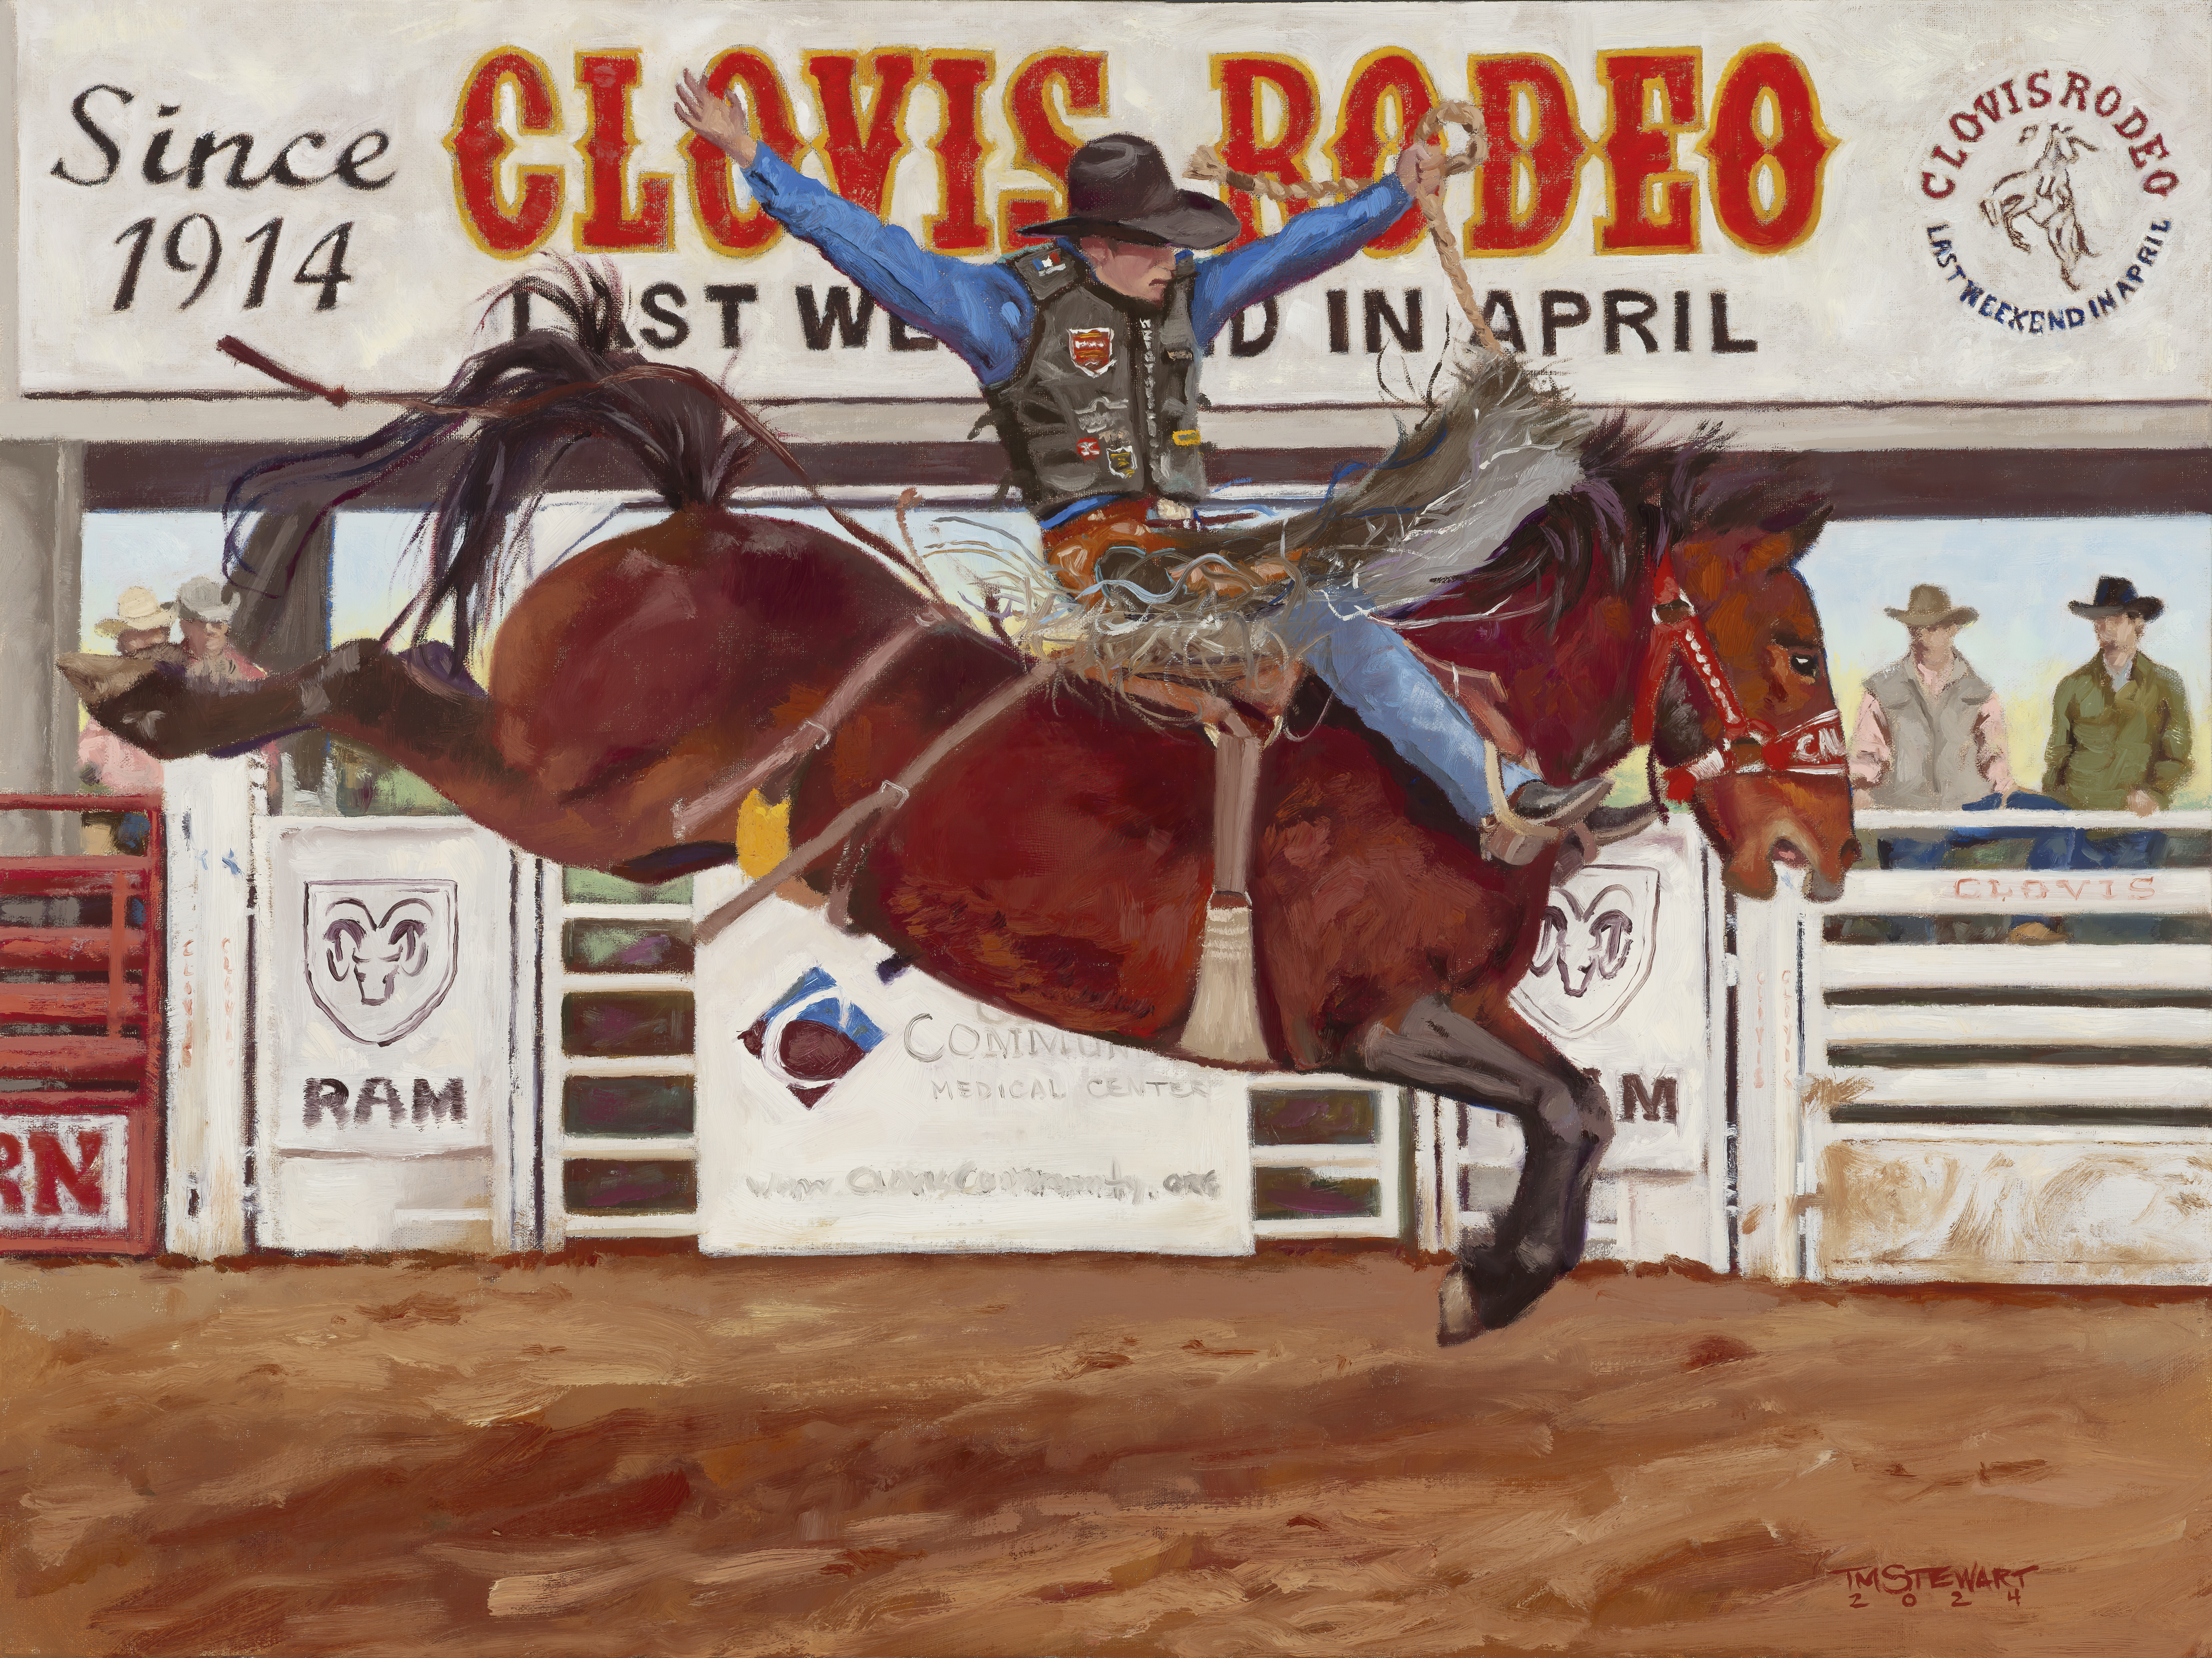 Clovis Rodeo 110